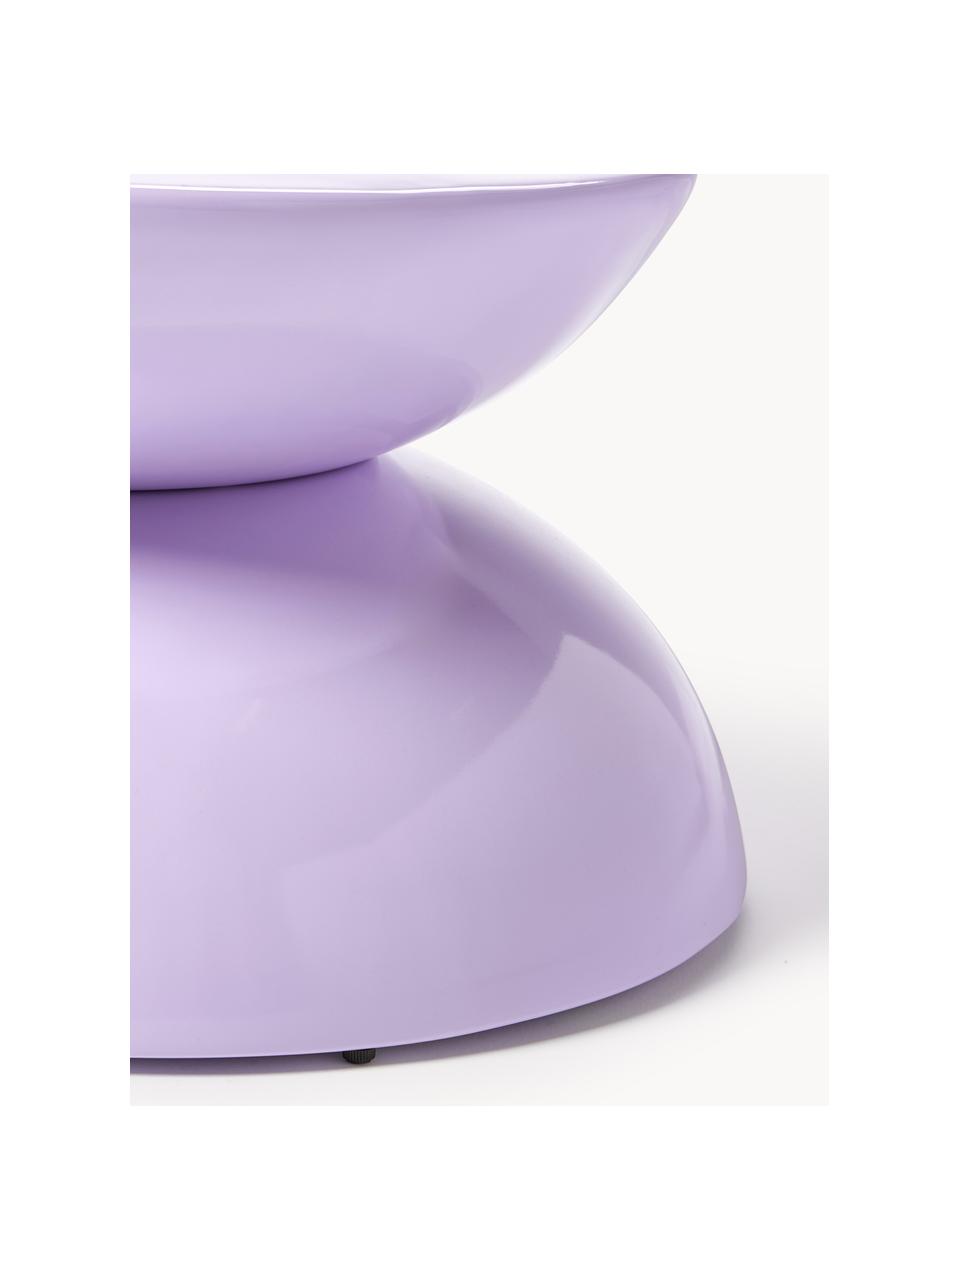 Interiérový/exteriérový odkládací stolek Gigi, Umělá hmota, kov s práškovým nástřikem, Levandulová, Š 65 cm, V 35 cm